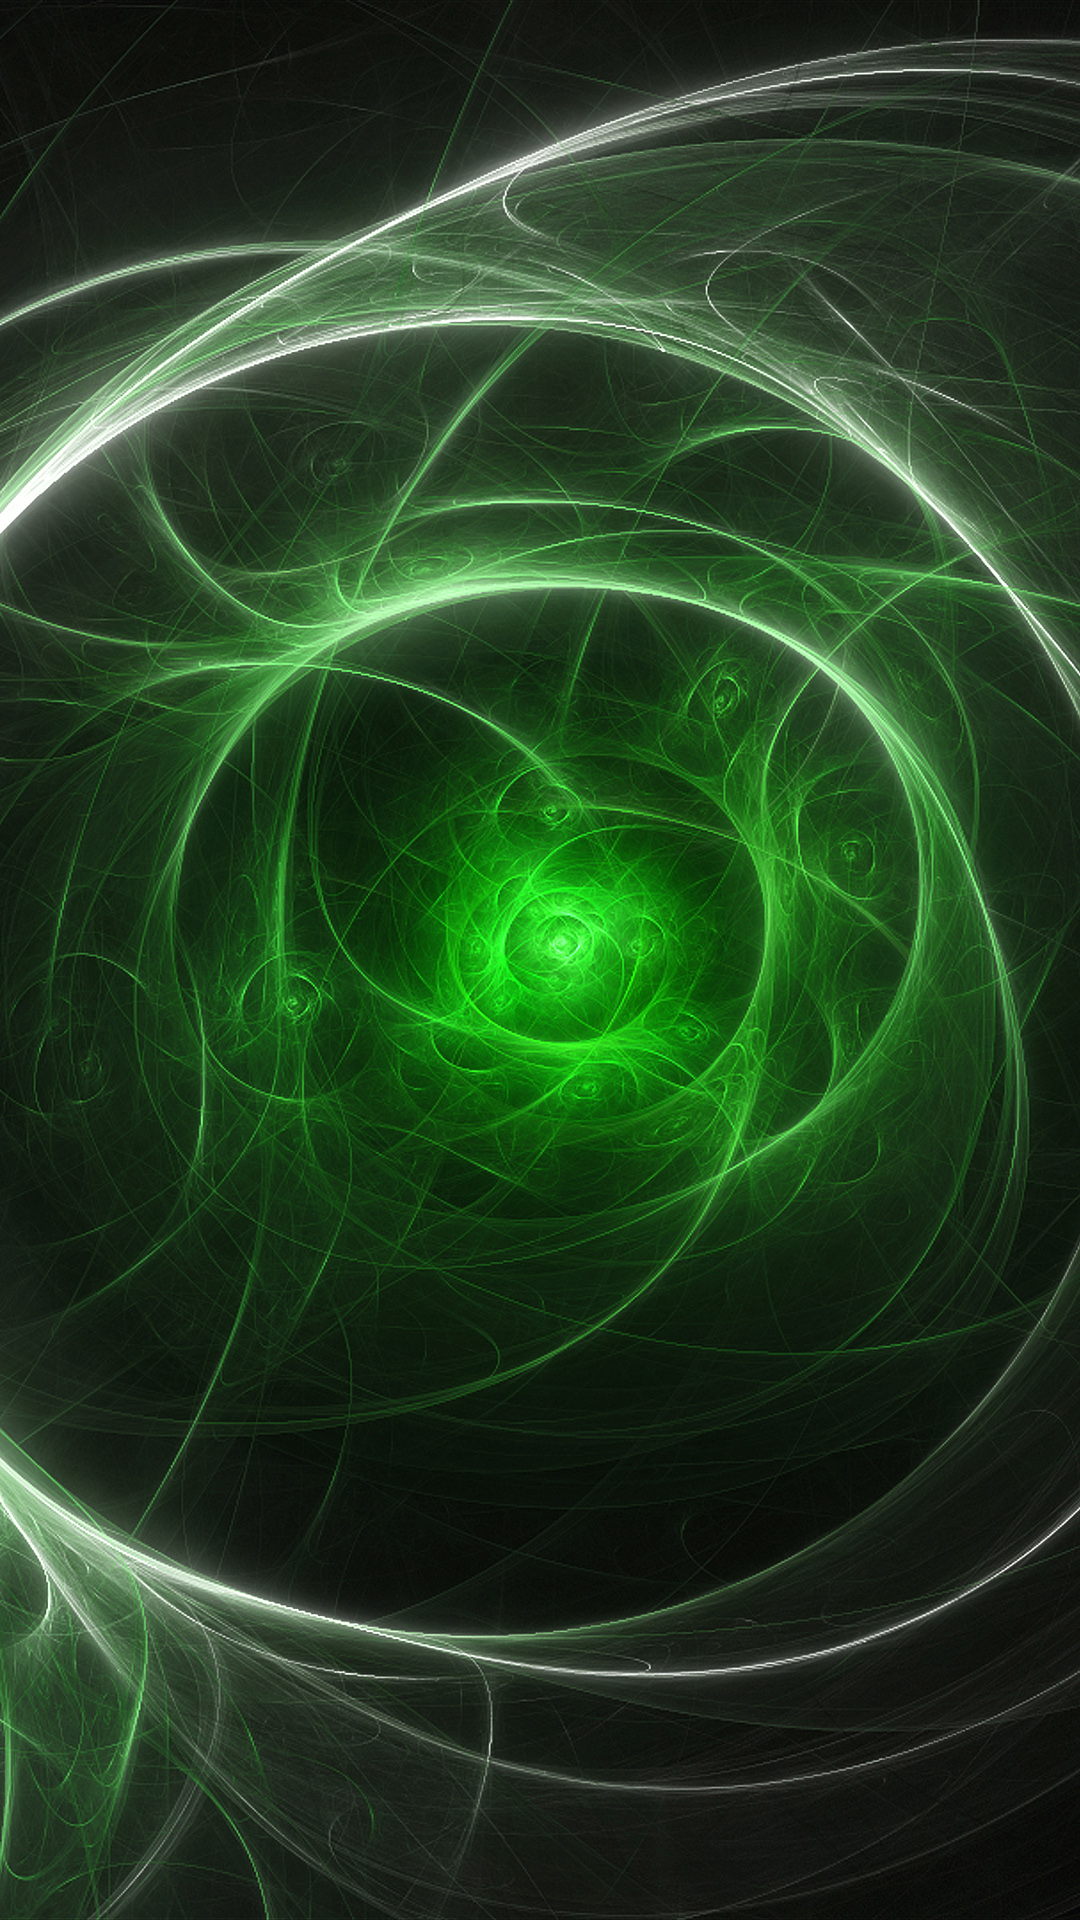 Green Swirl iPhone Wallpaper HD